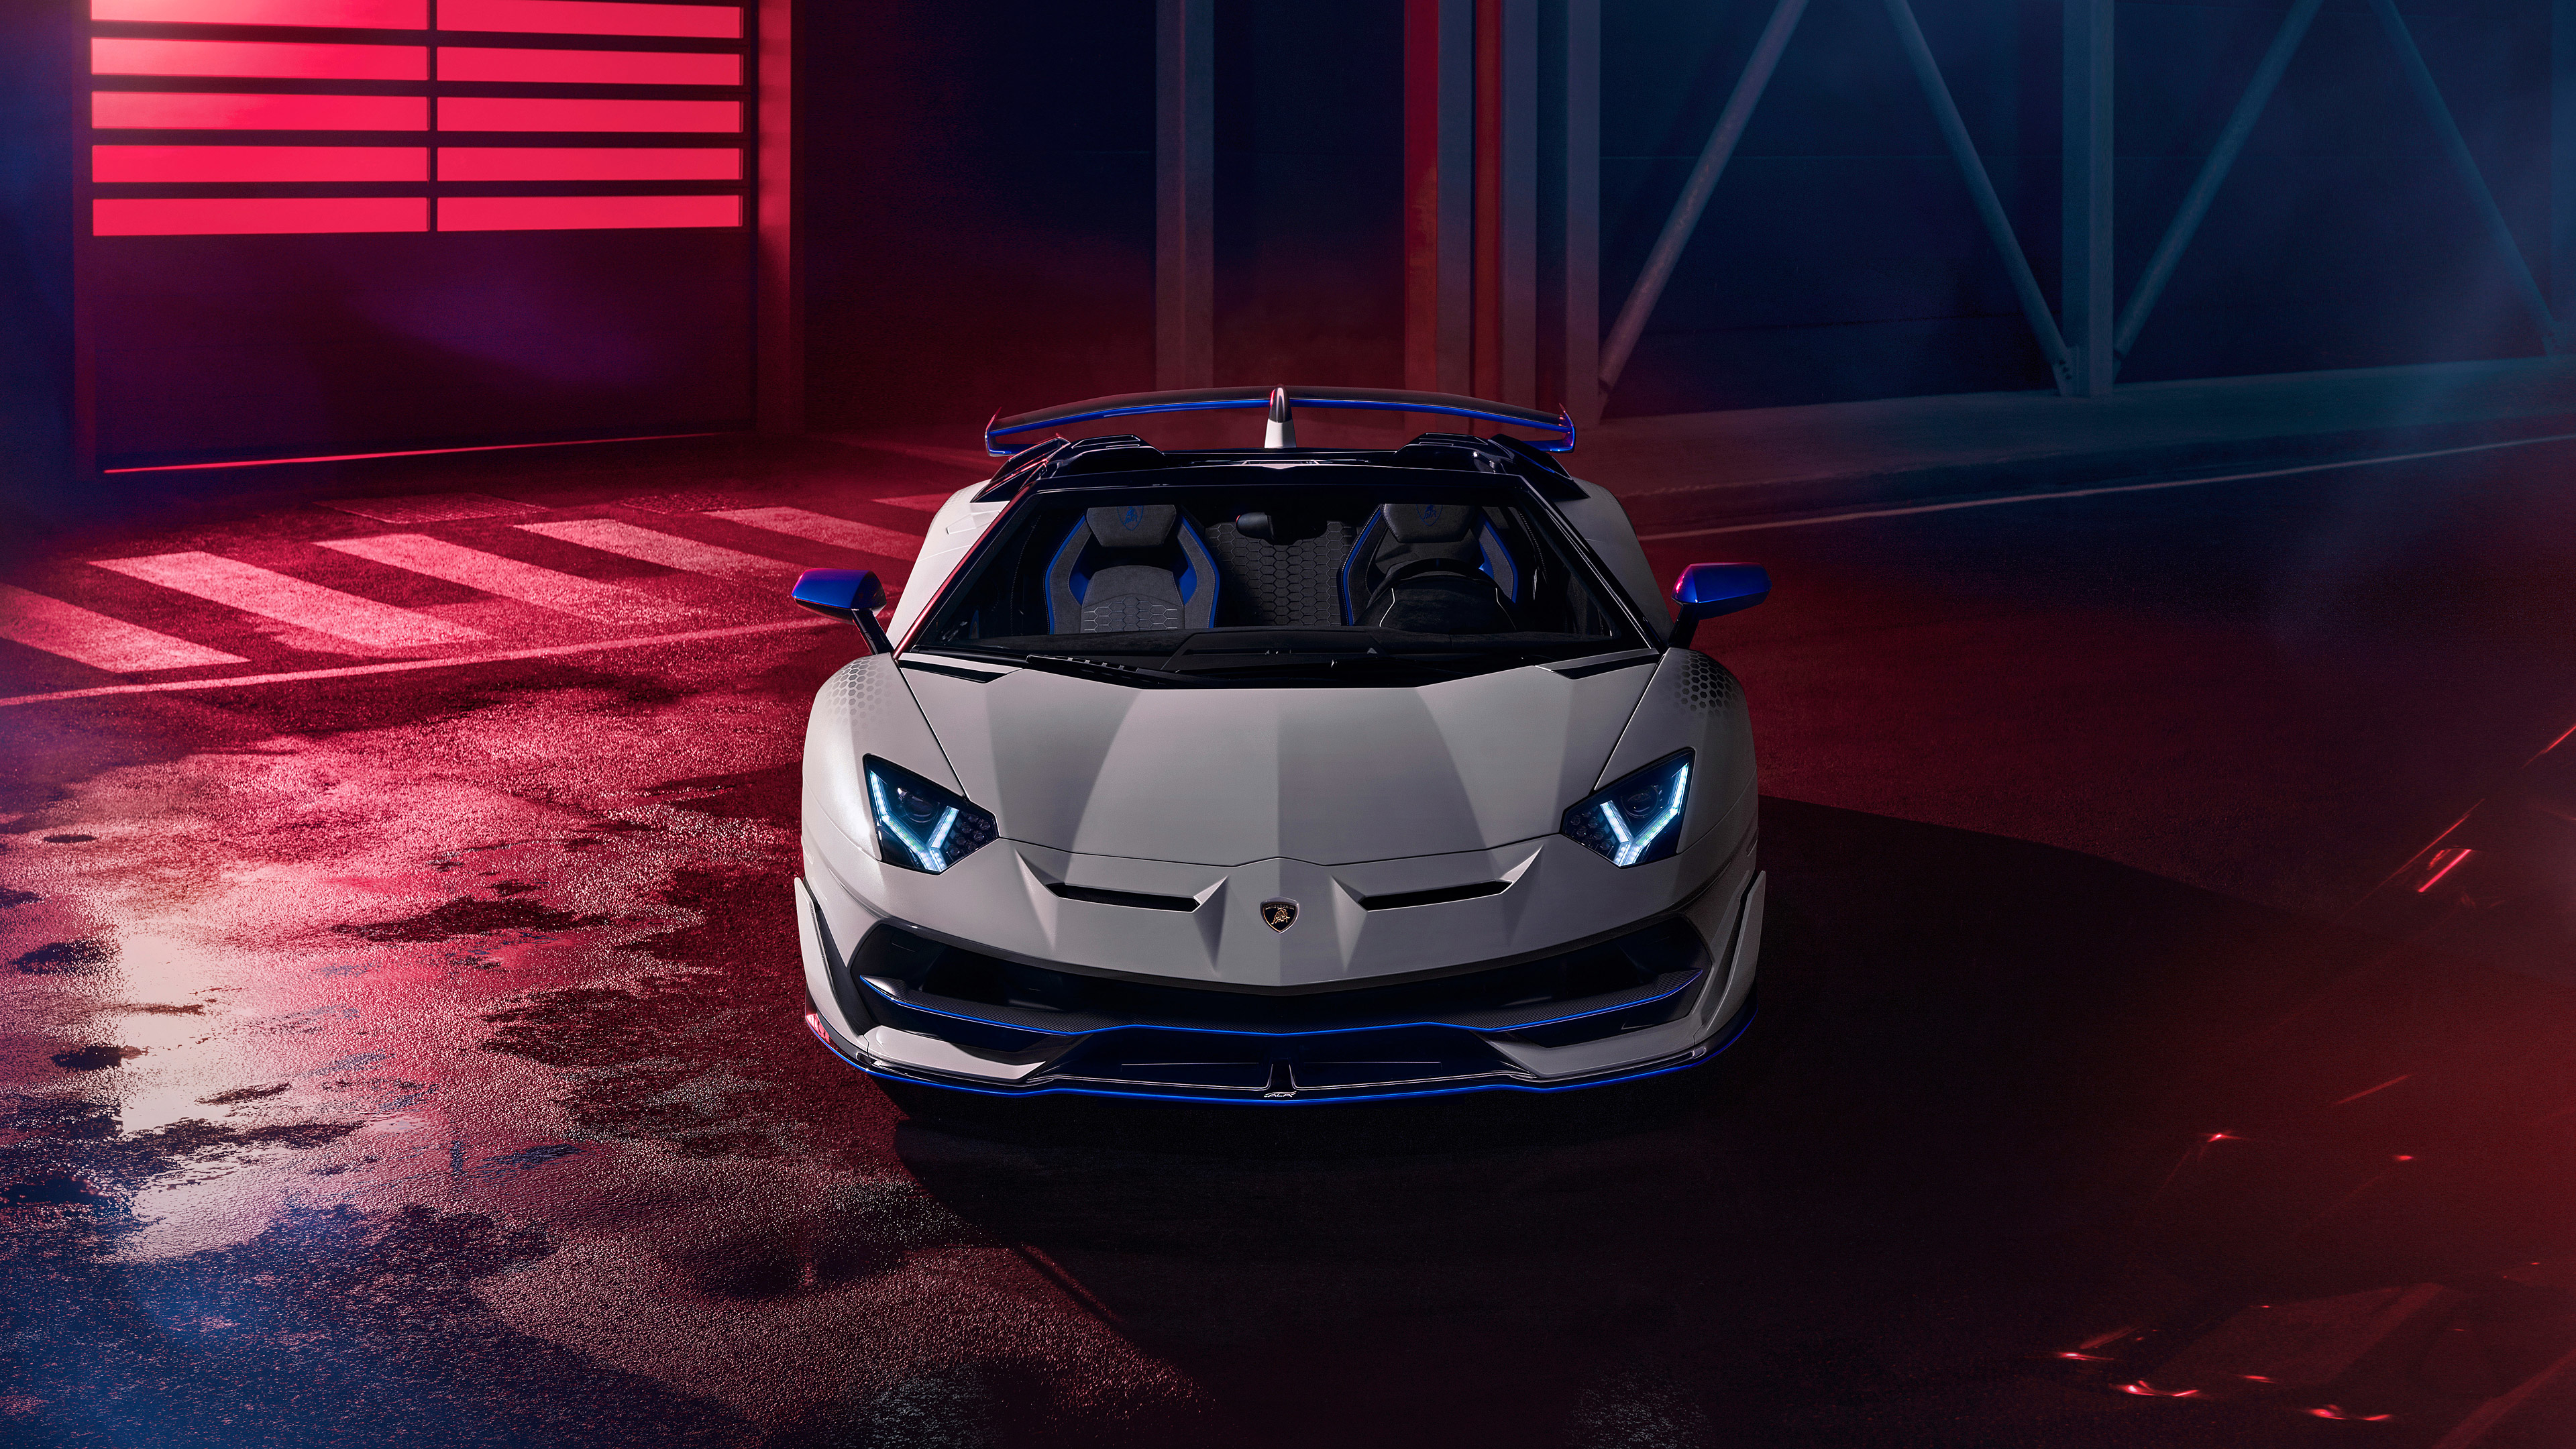 Lamborghini Aventador SVJ Roadster Xago Wallpaper, HD Cars 4K Wallpapers,  Images, Photos and Background - Wallpapers Den